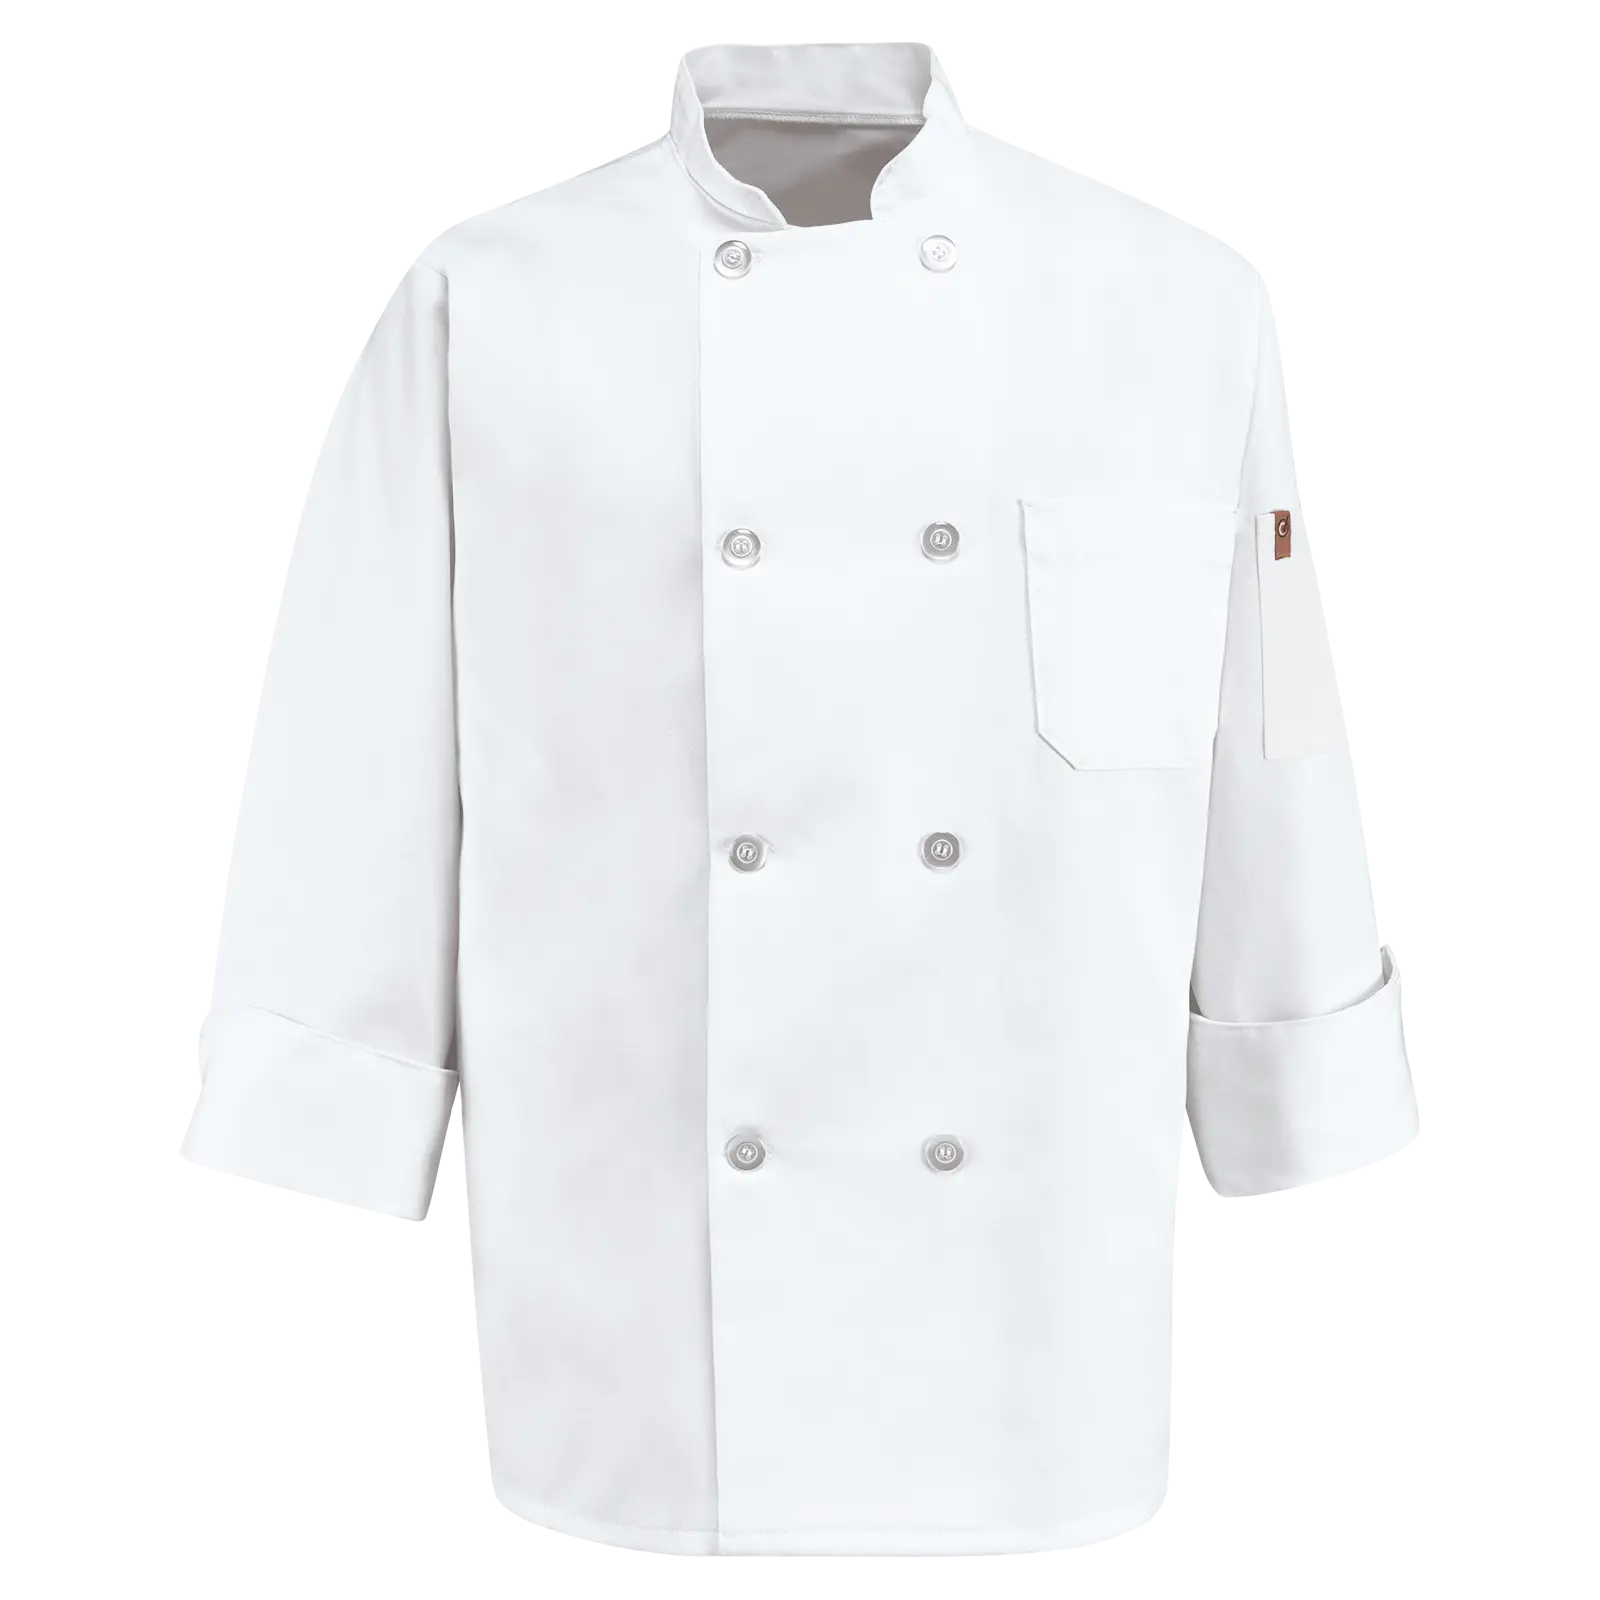 Chef Designs Hospitality Chef Coats 0413 Eight Pearl Button Chef Coat-Chef Designs